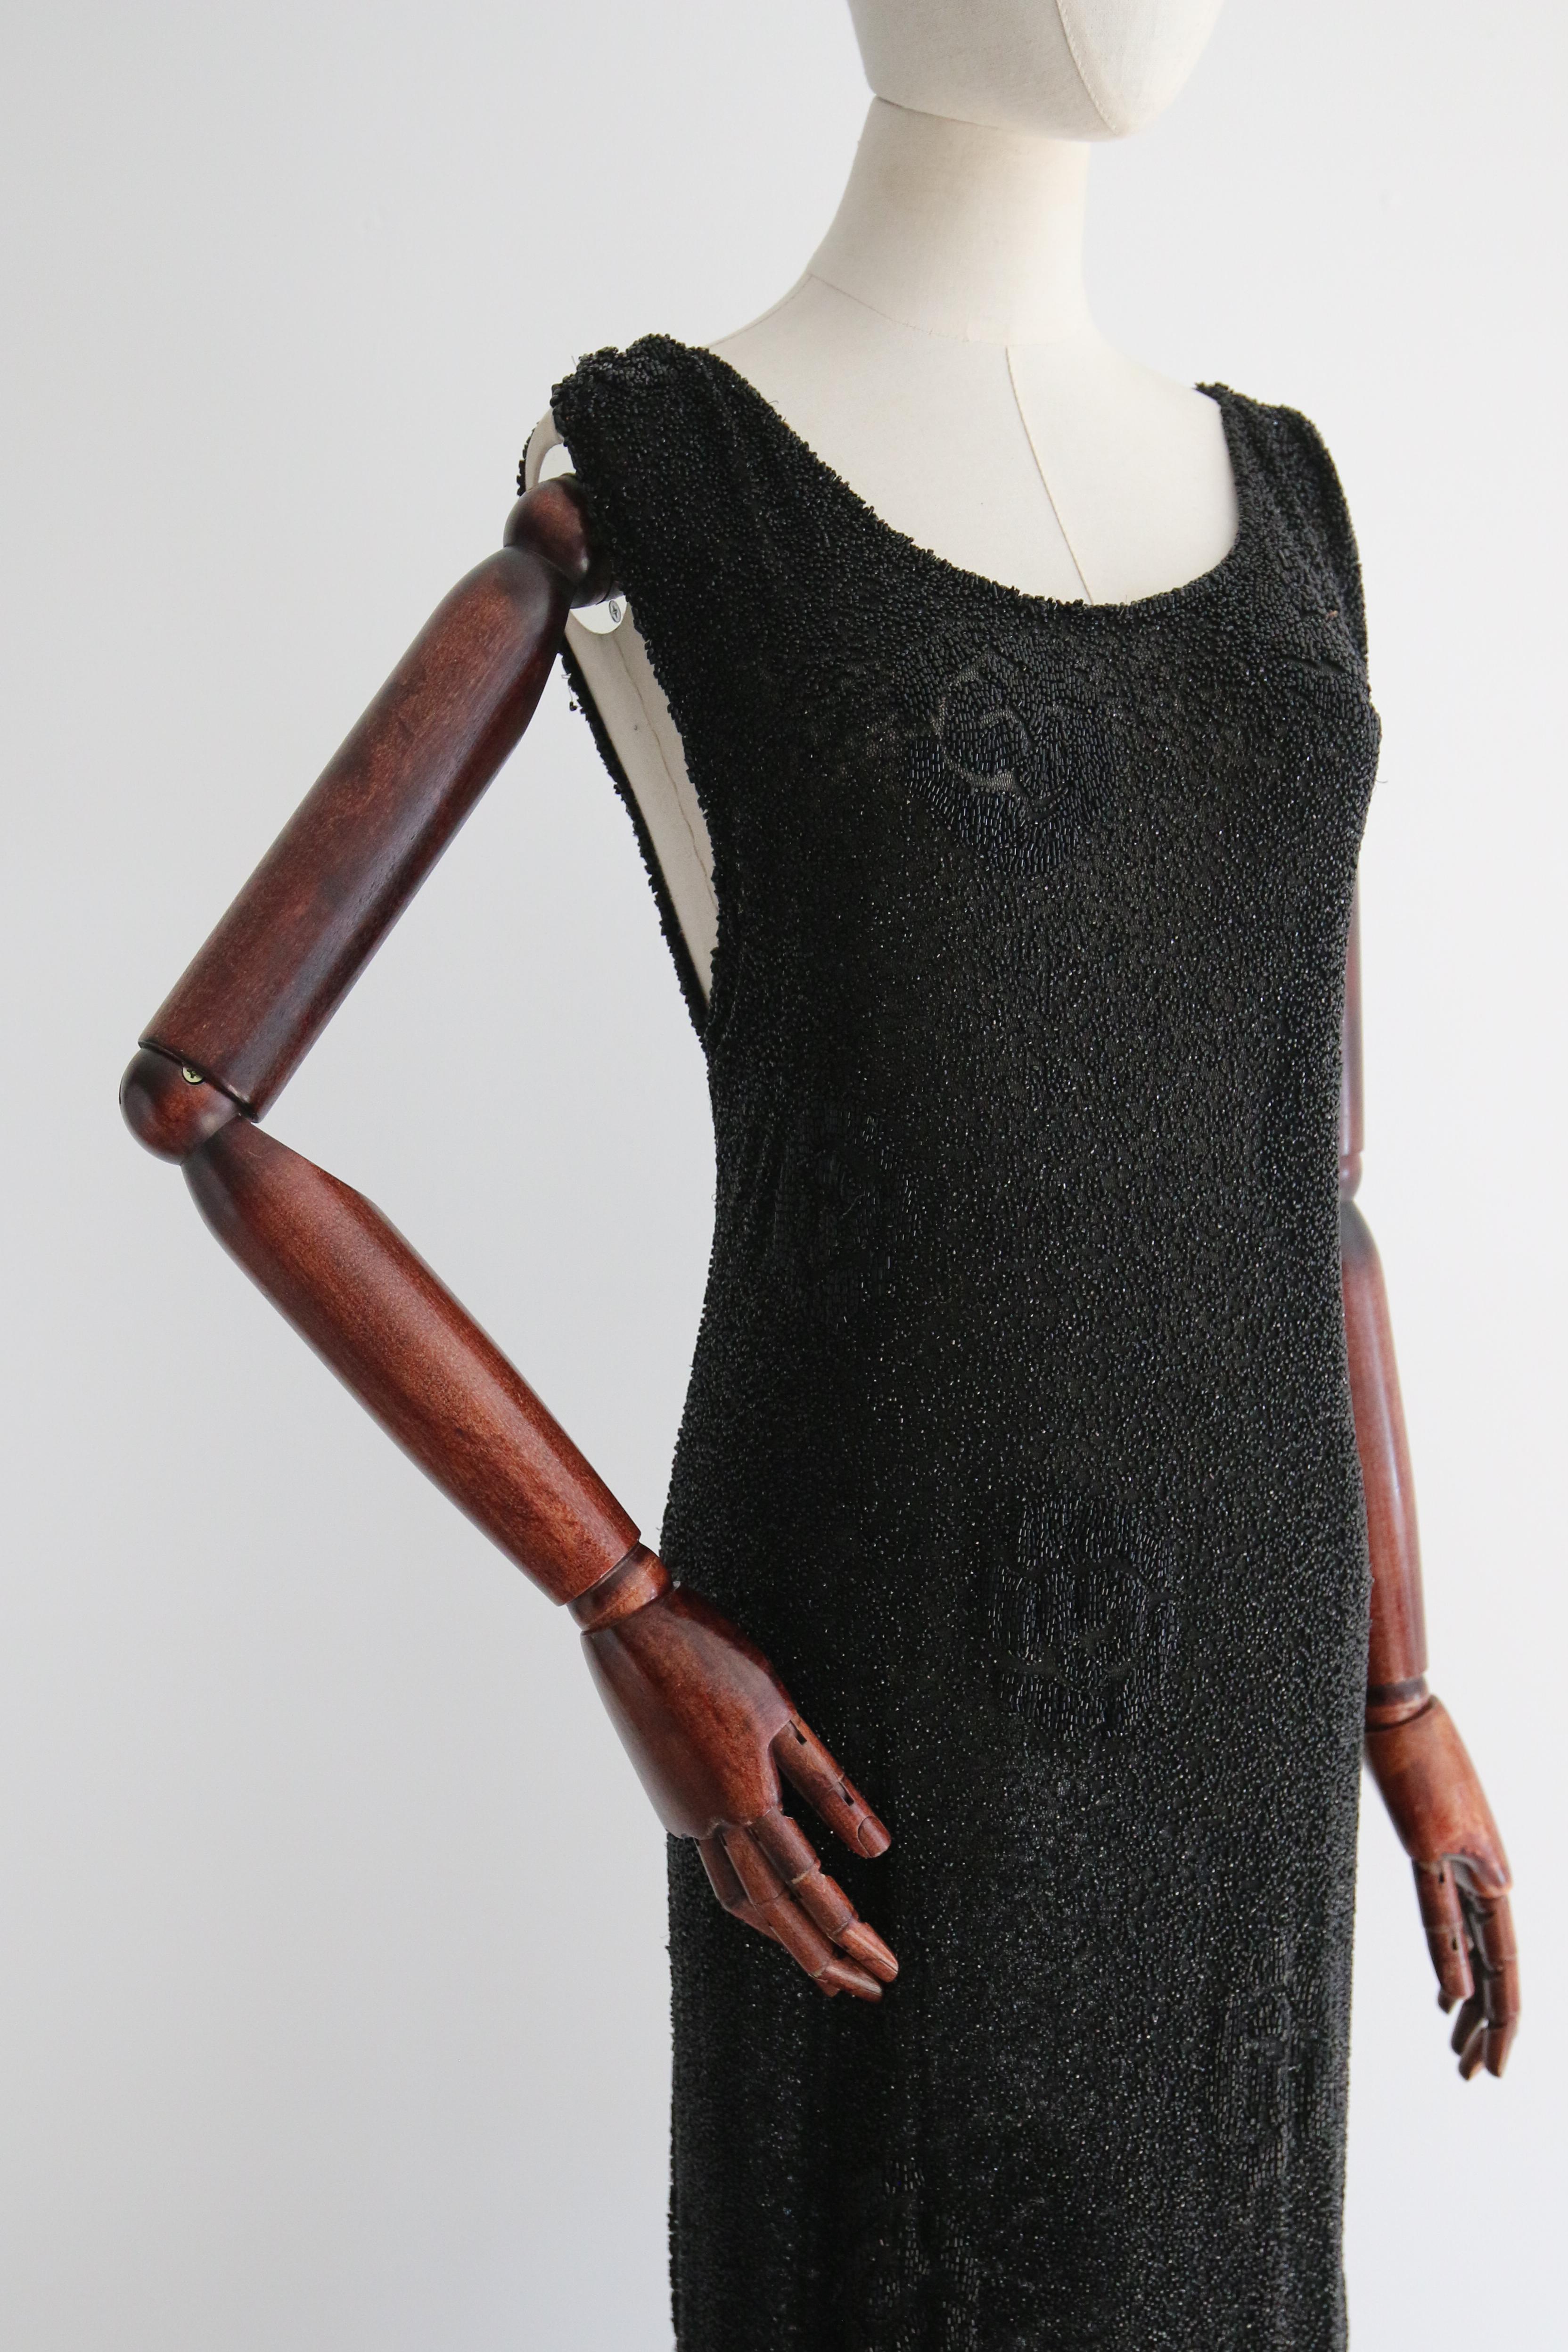 Vintage 1920's Black Beaded Evening Dress UK 12-14 US 8-10 1